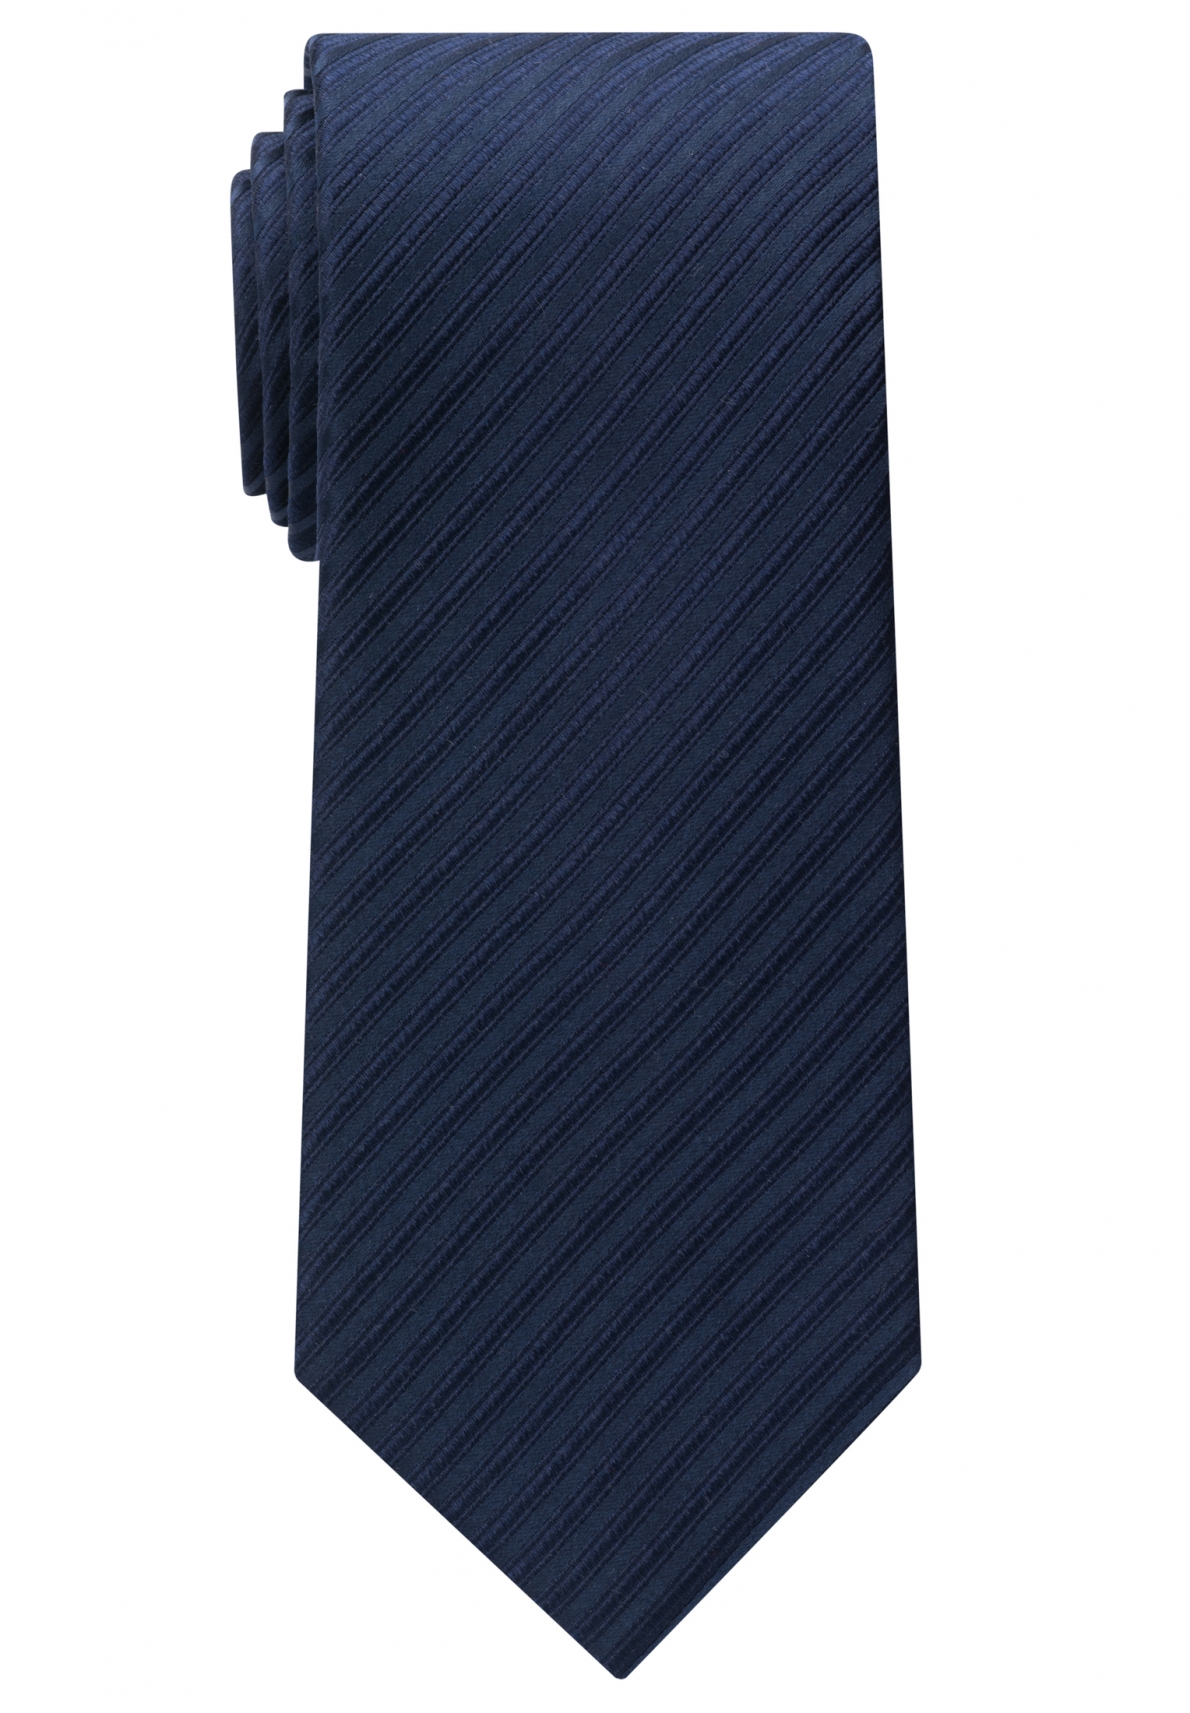 Eterna Krawatte dunkelblau gestreift SPEZIALIST 9716-19 | MODE